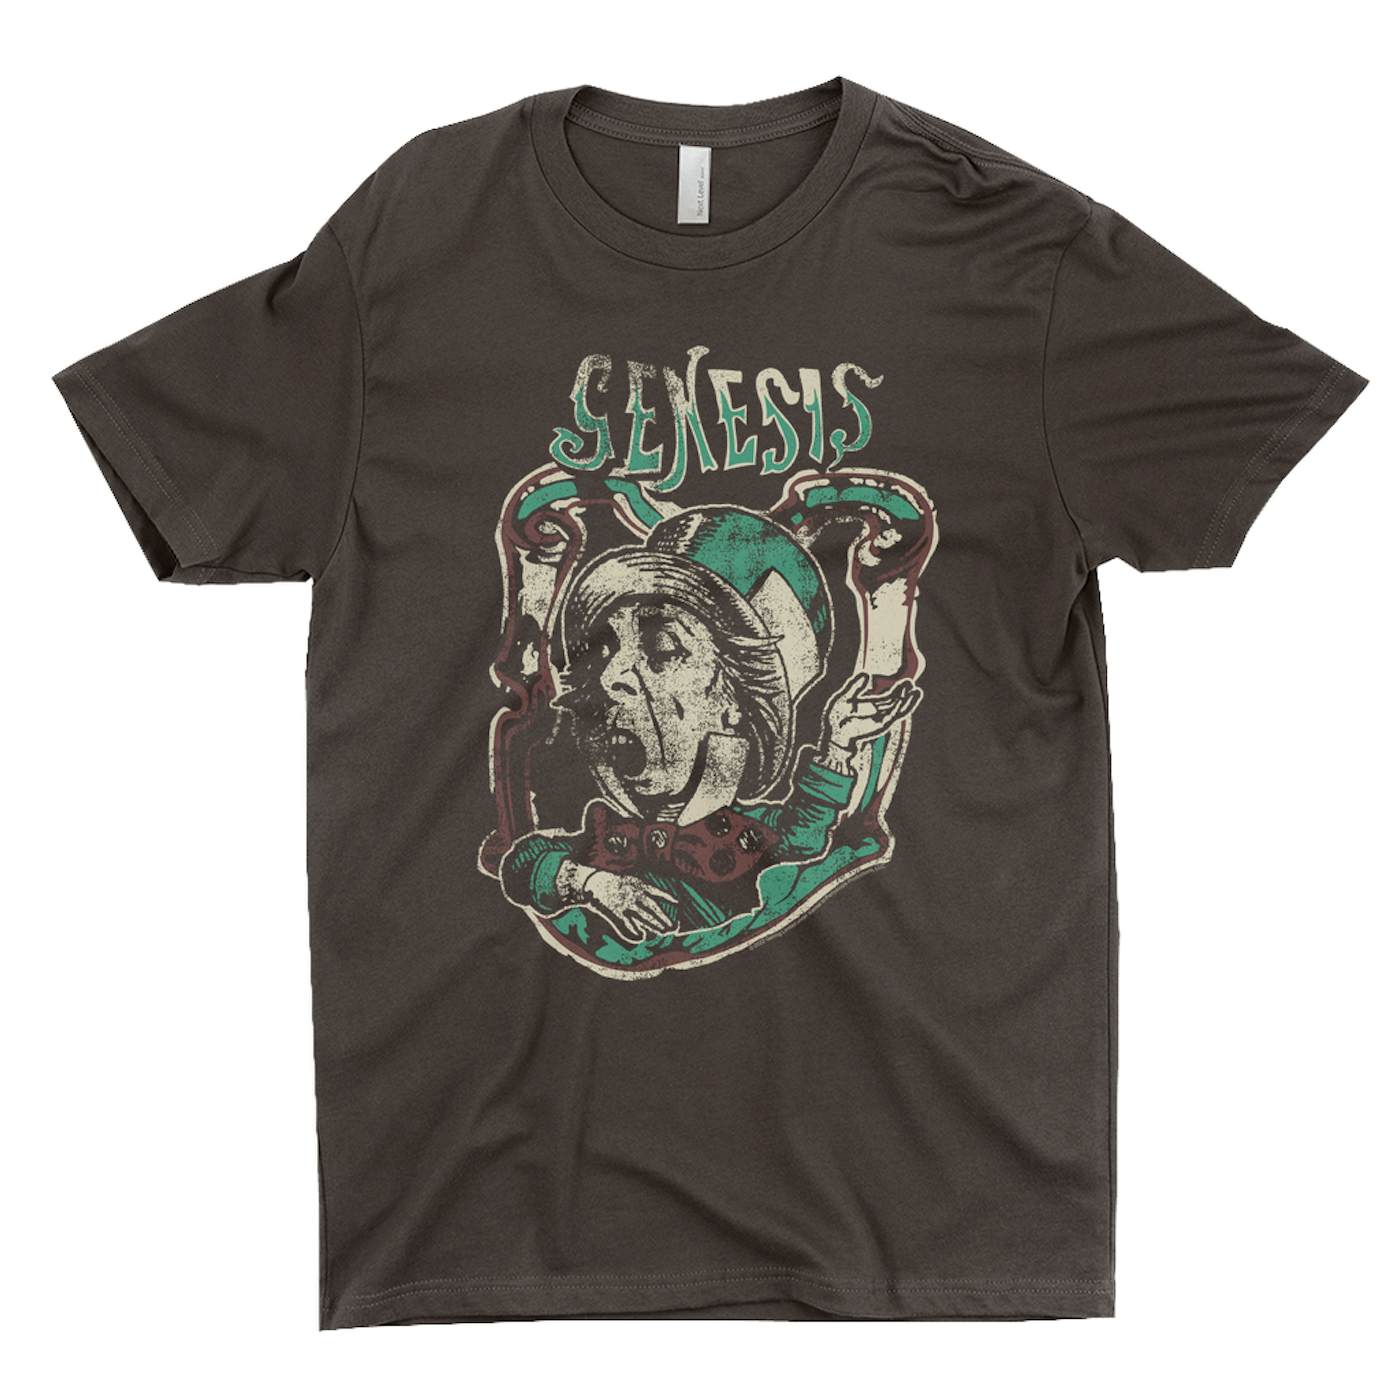 Genesis T-Shirt | Genesis And The Mad Hatter Distressed Genesis Shirt